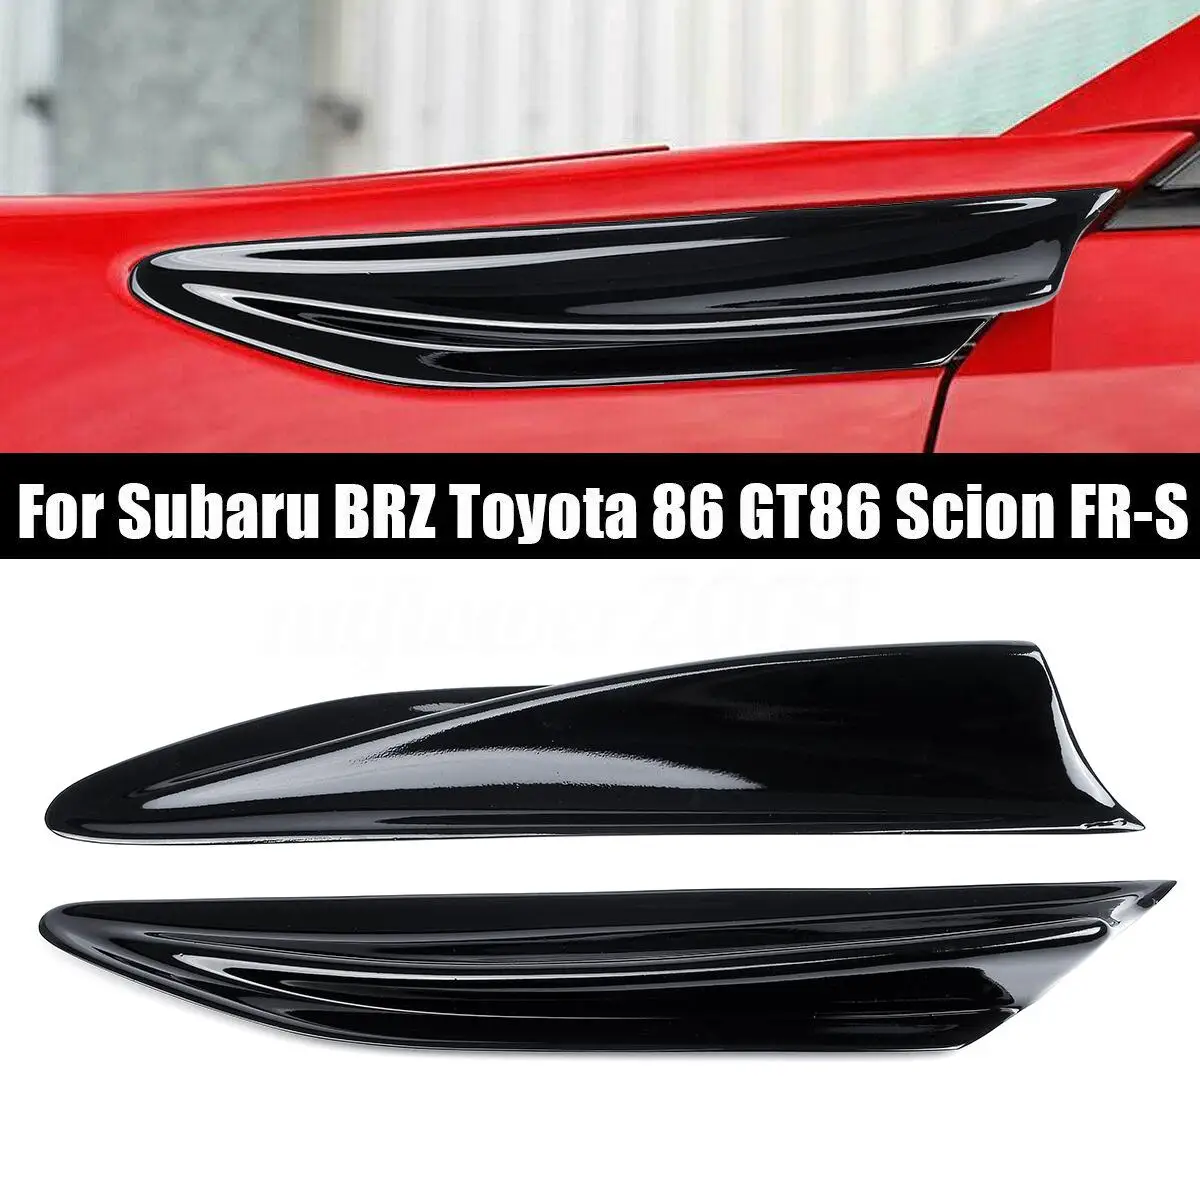 

2pcs Side Fender Fin Vents Cover Trim For Subaru BRZ Toyota 86 GT86 Scion FR-S Glossy Black Real Carbon Fiber